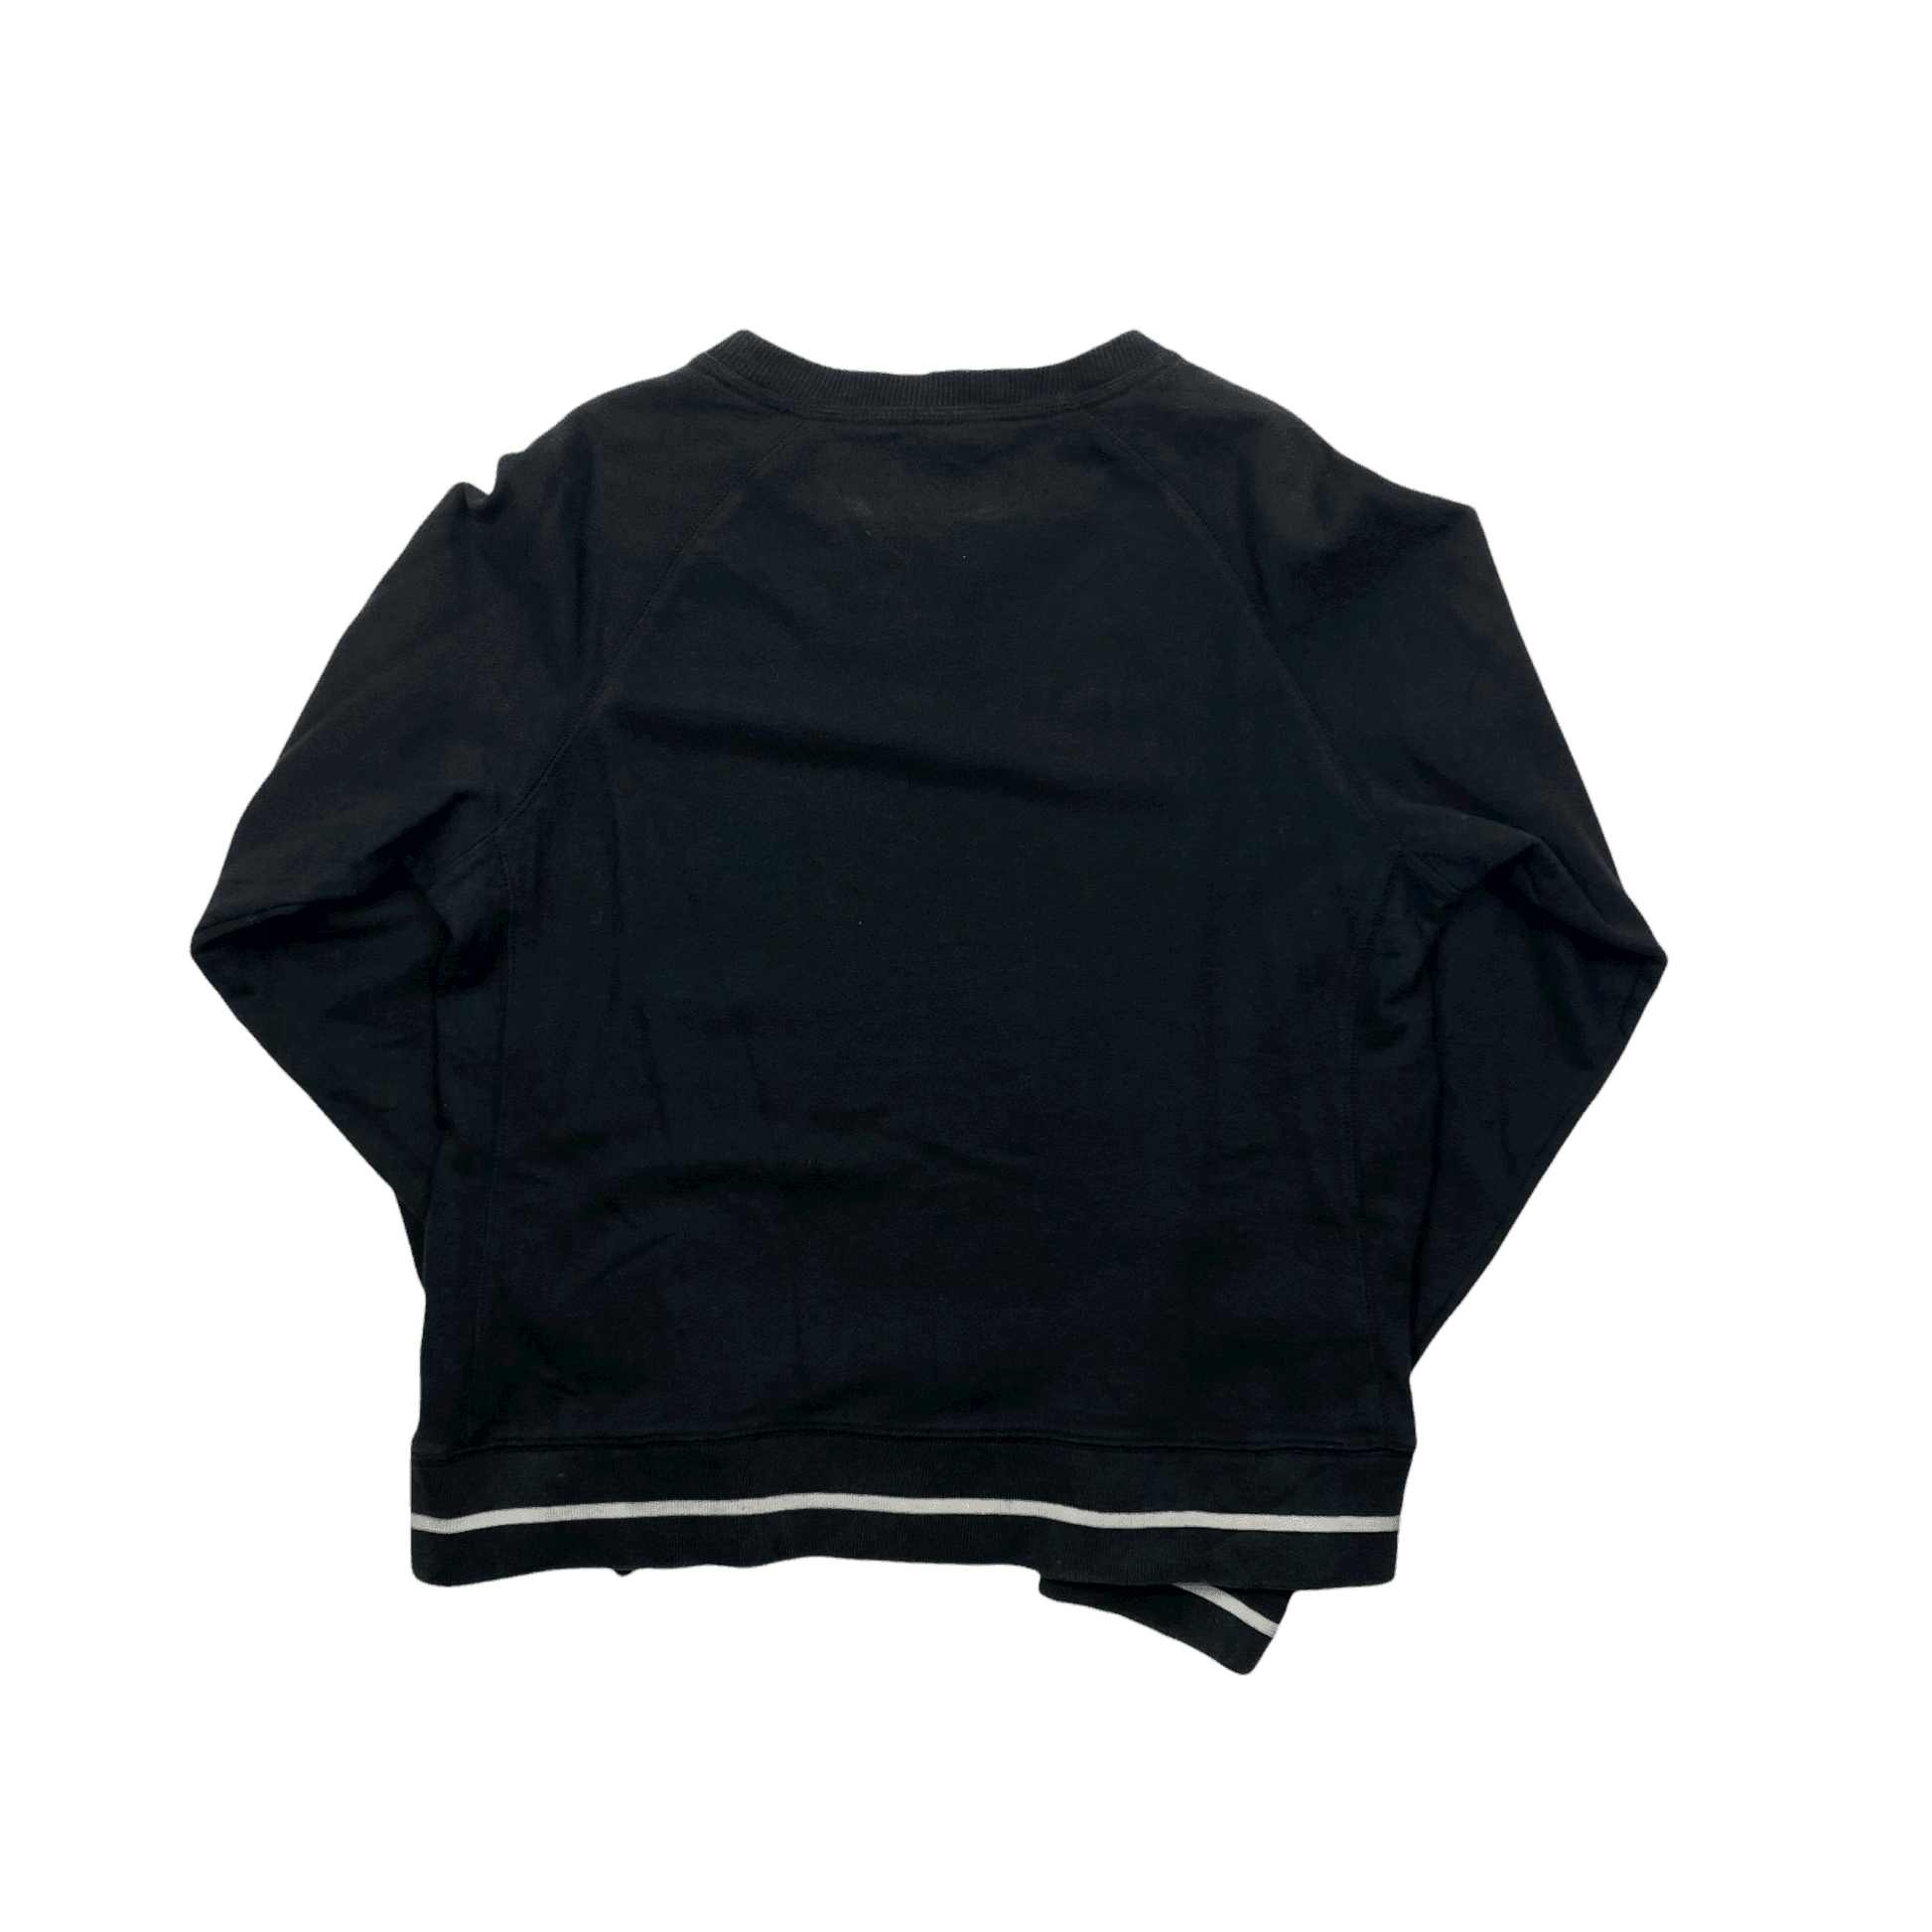 Vintage Women's Black Nike Sweatshirt - Large - The Streetwear Studio